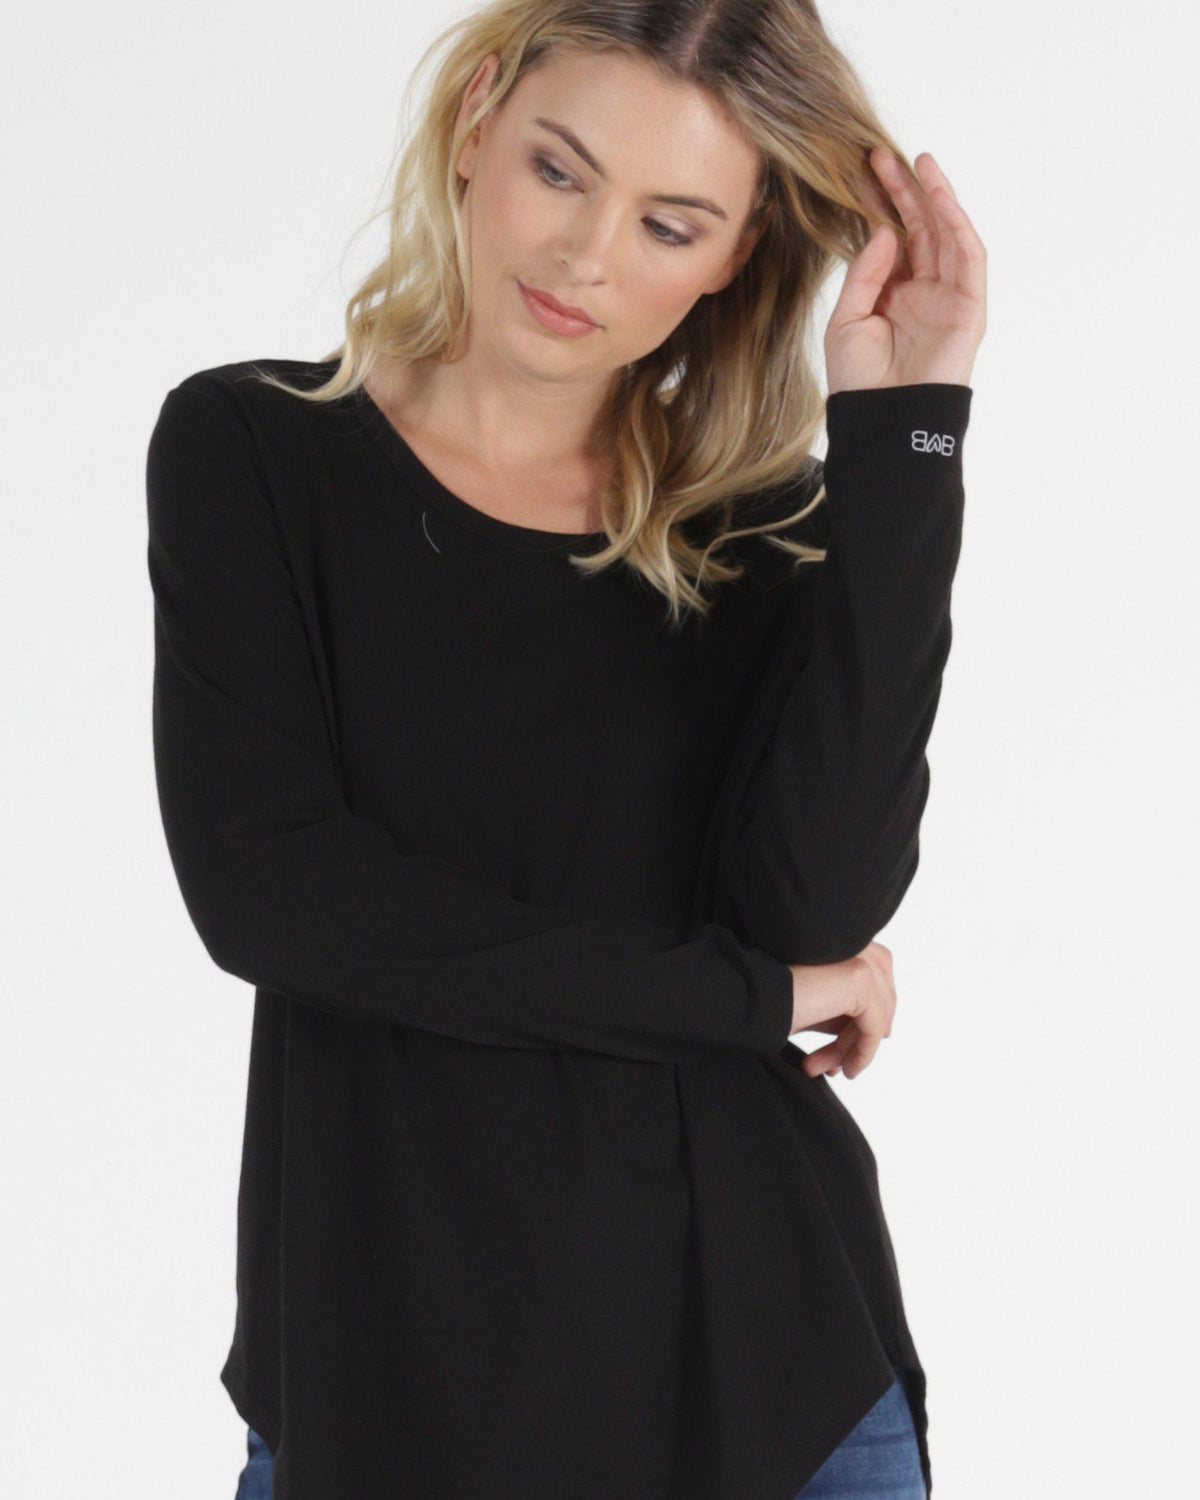 Megan Long Sleeve Top - Black - Betty Basics - FUDGE Gifts Home Lifestyle